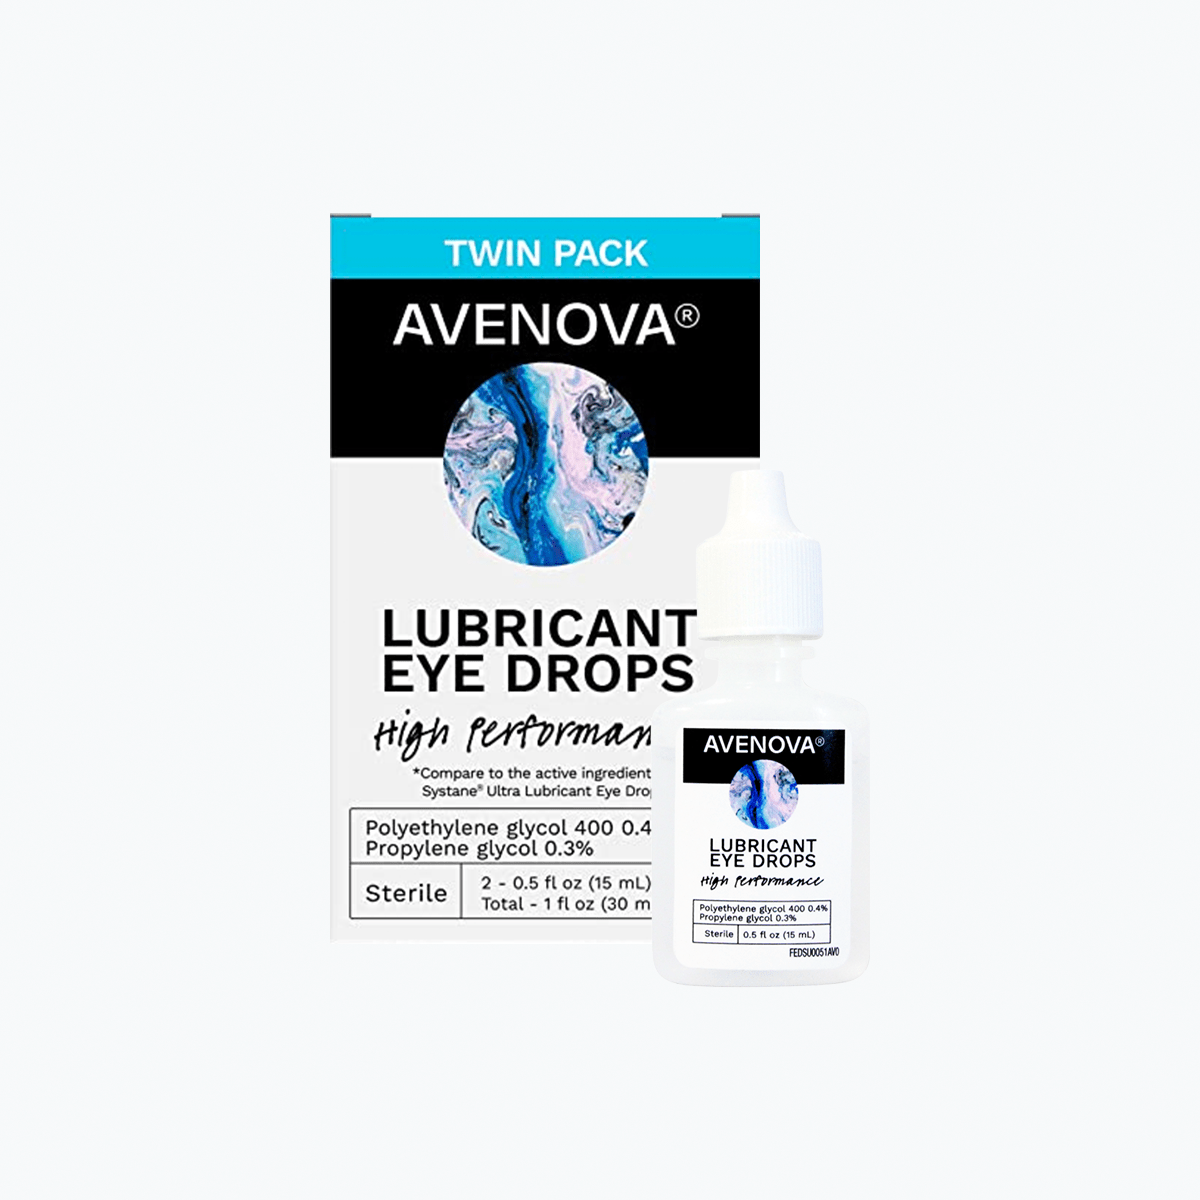 Avenova Lubricant Eye Drops (Twin Pack) 15ml Bottles - Dryeye Rescue